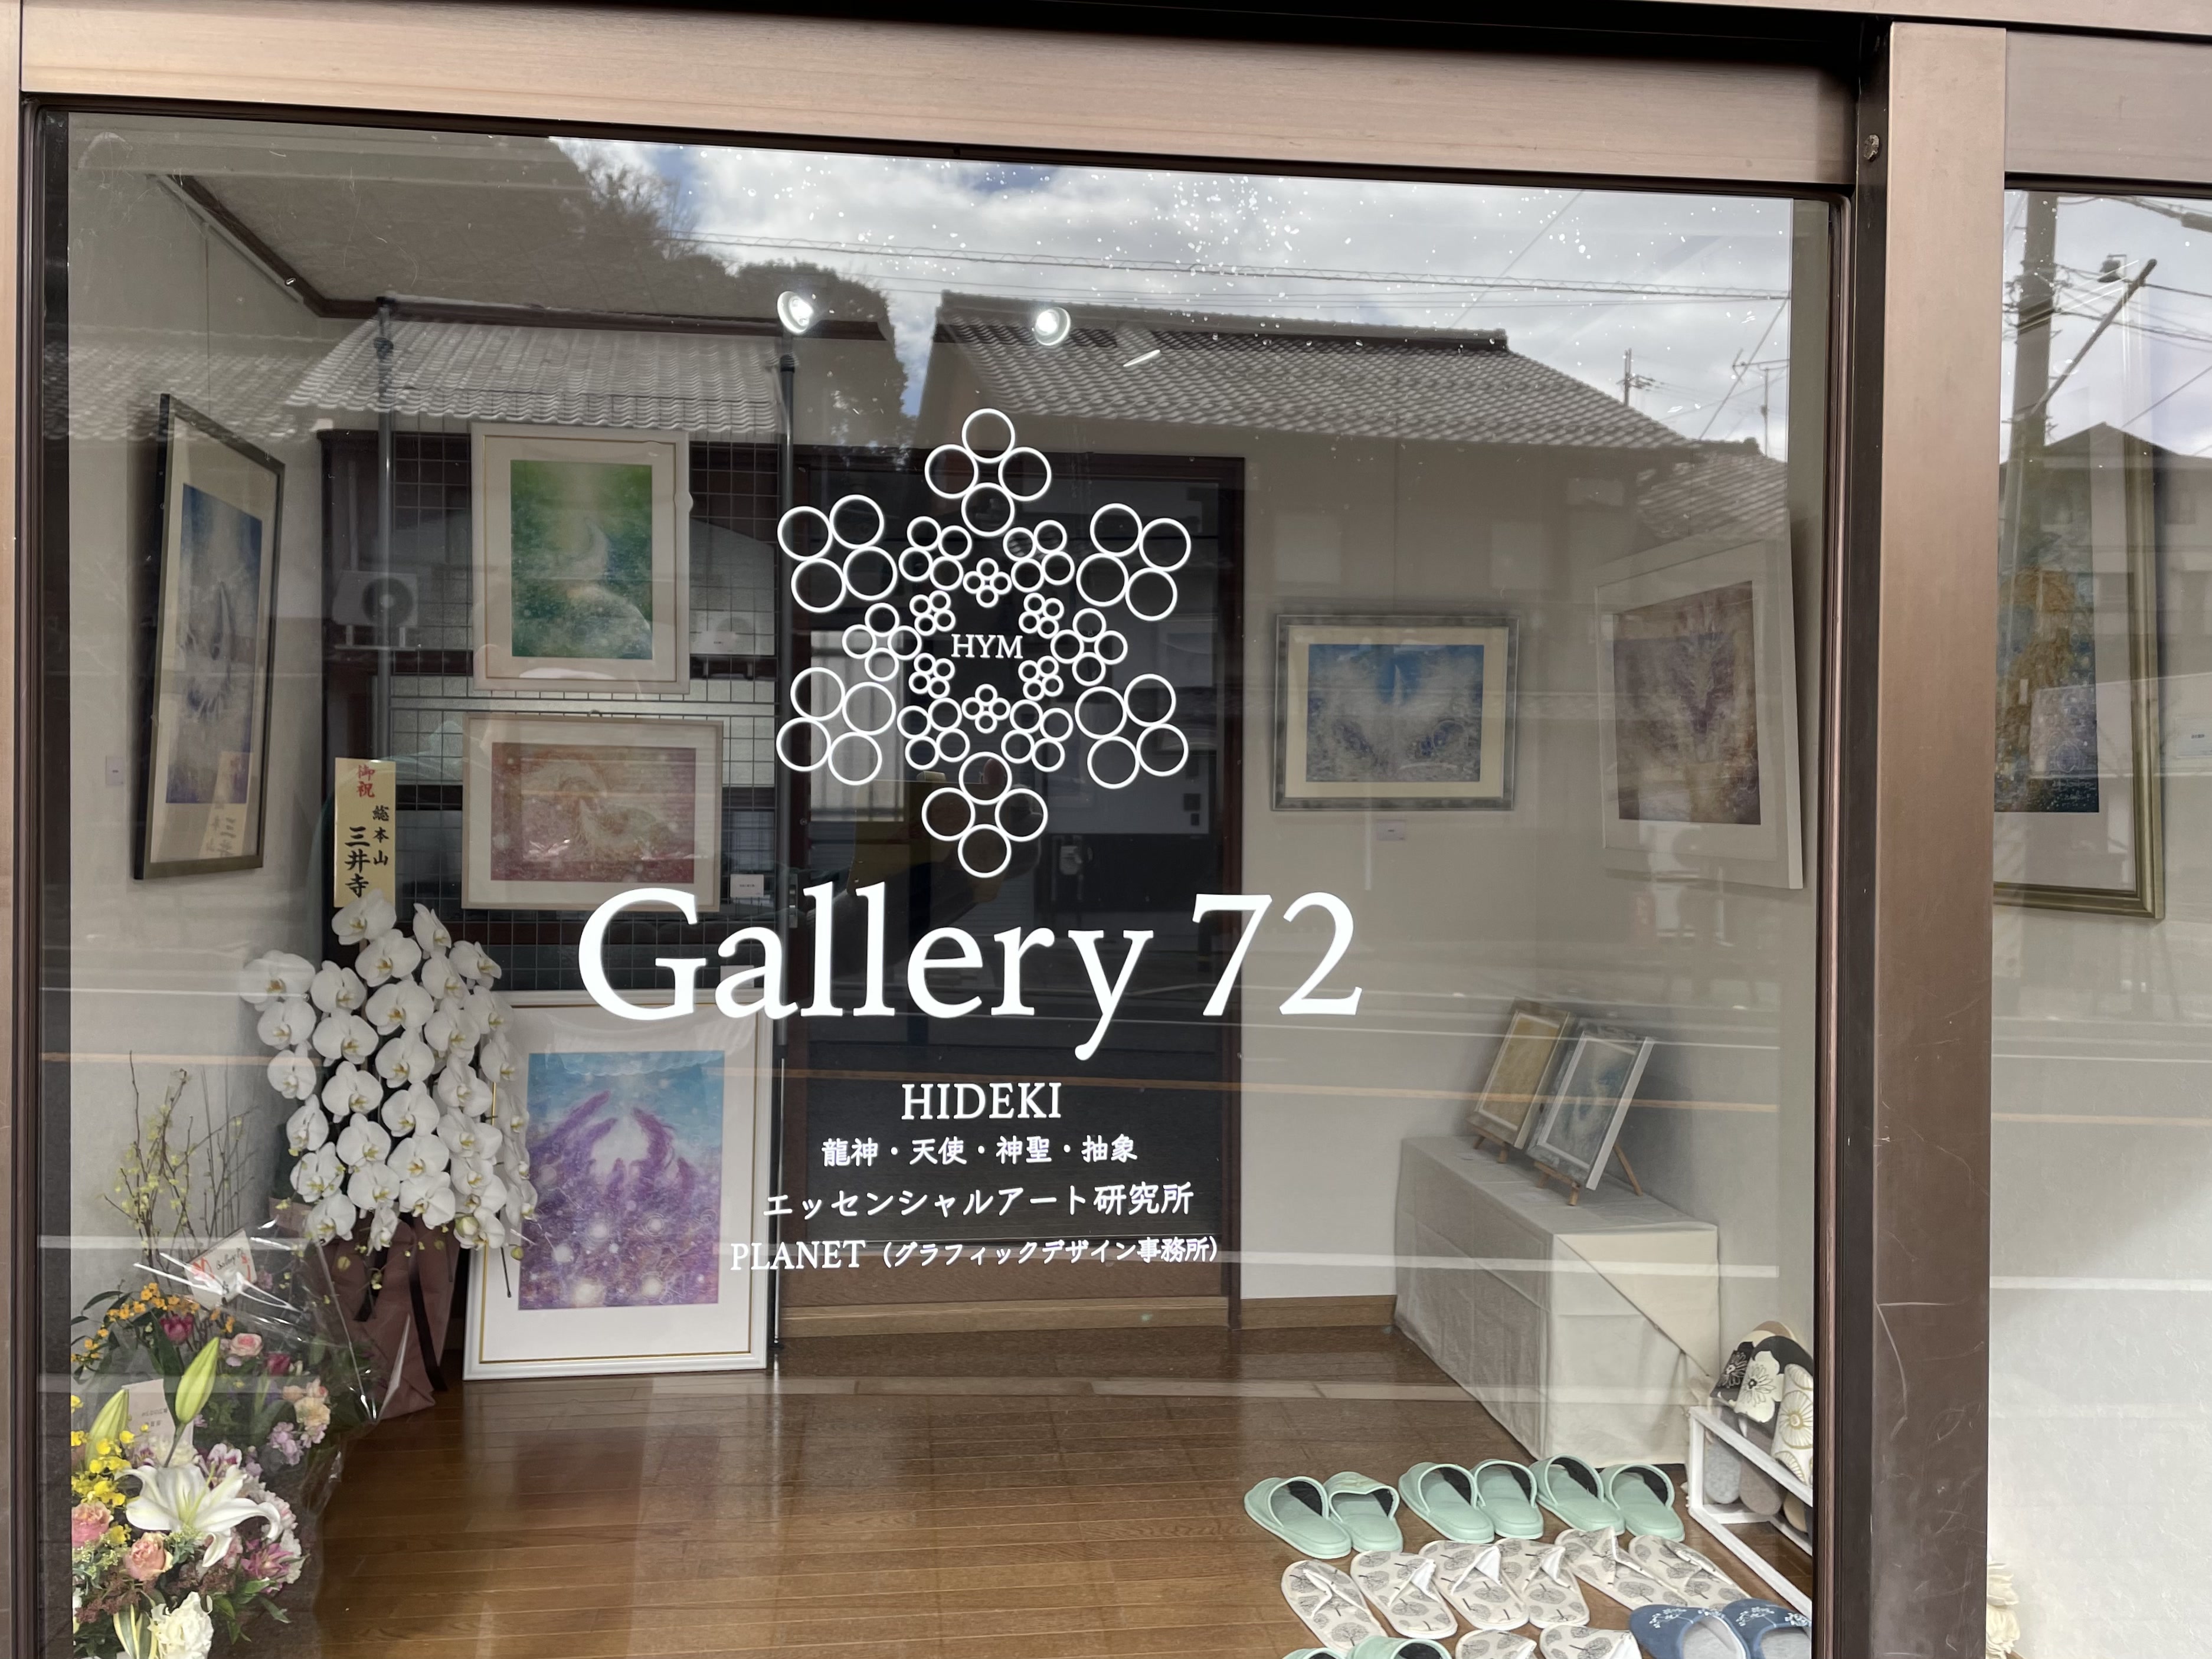 HIDEKI作品常設ギャラリー　Gallery72 2023.2.5 Open!